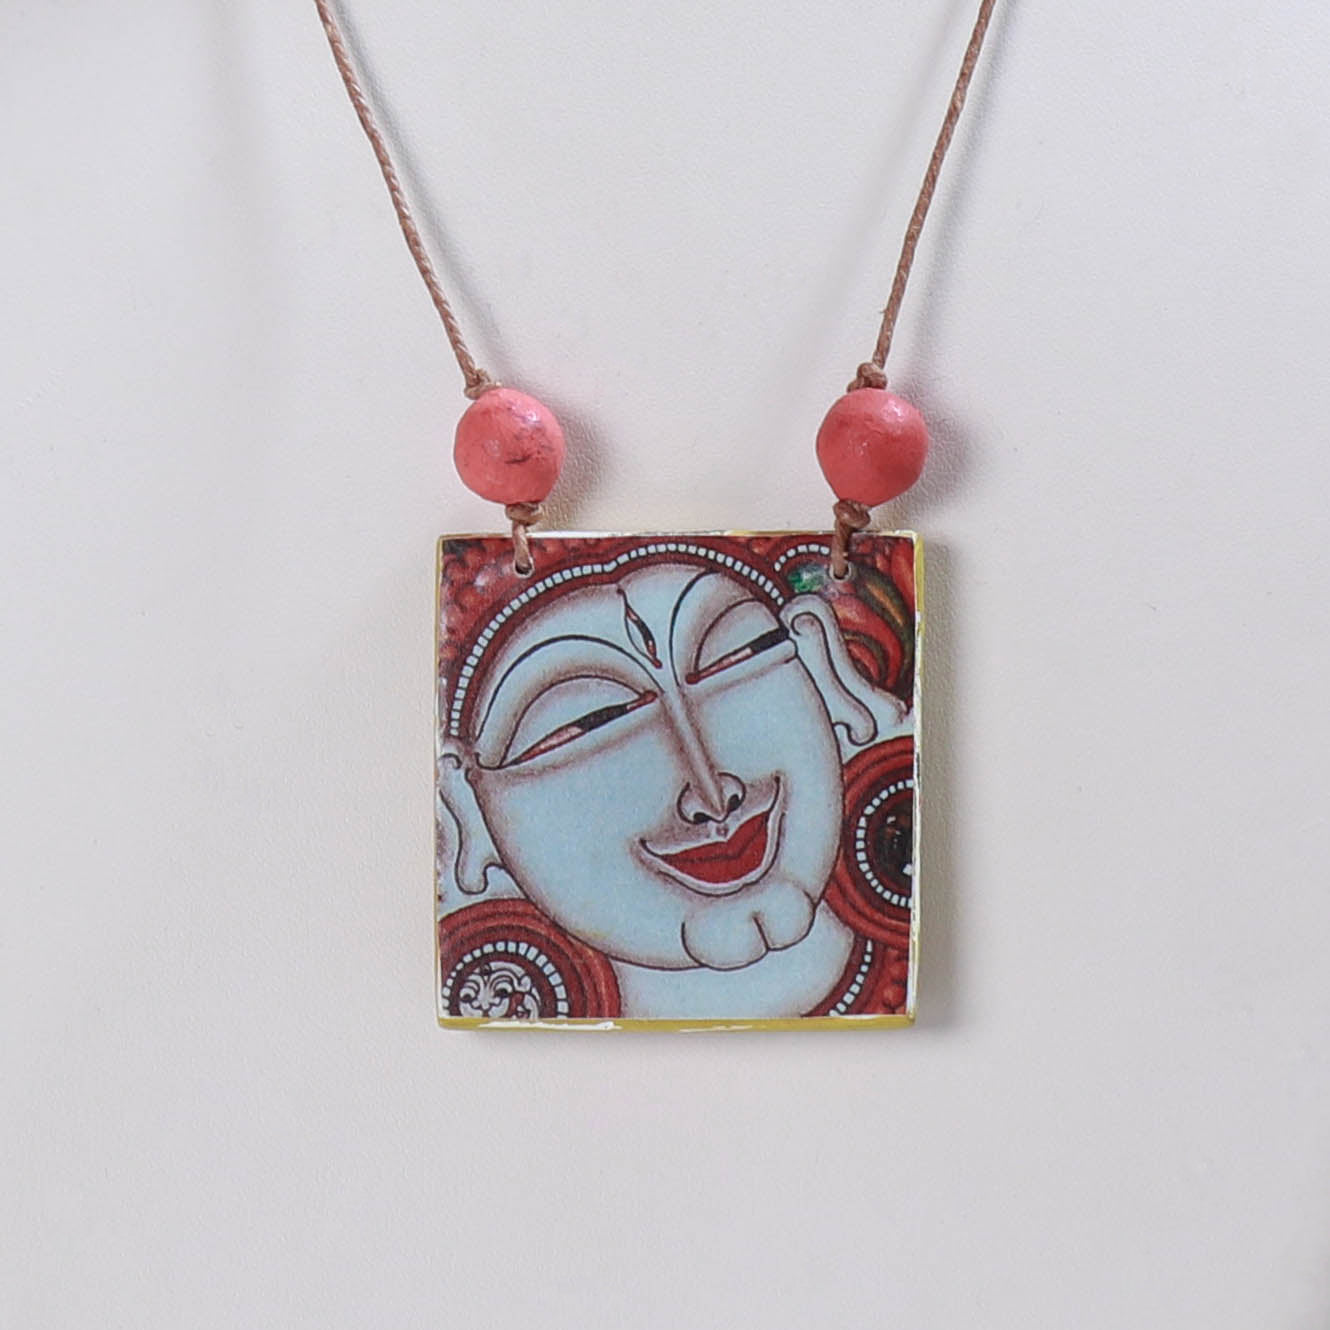  kerala mural art necklace